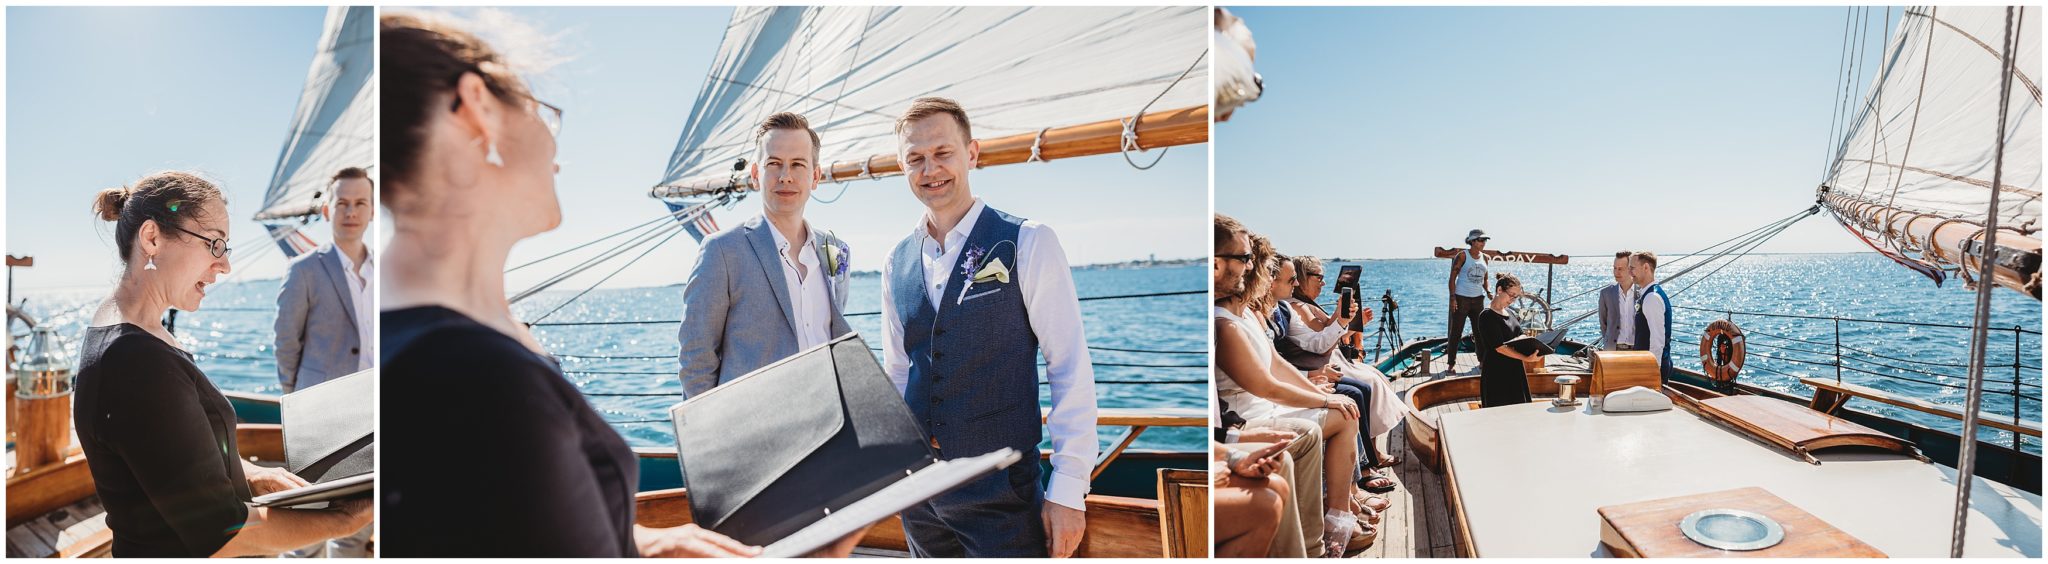 civil ceremony on ship - boston elopement photographer